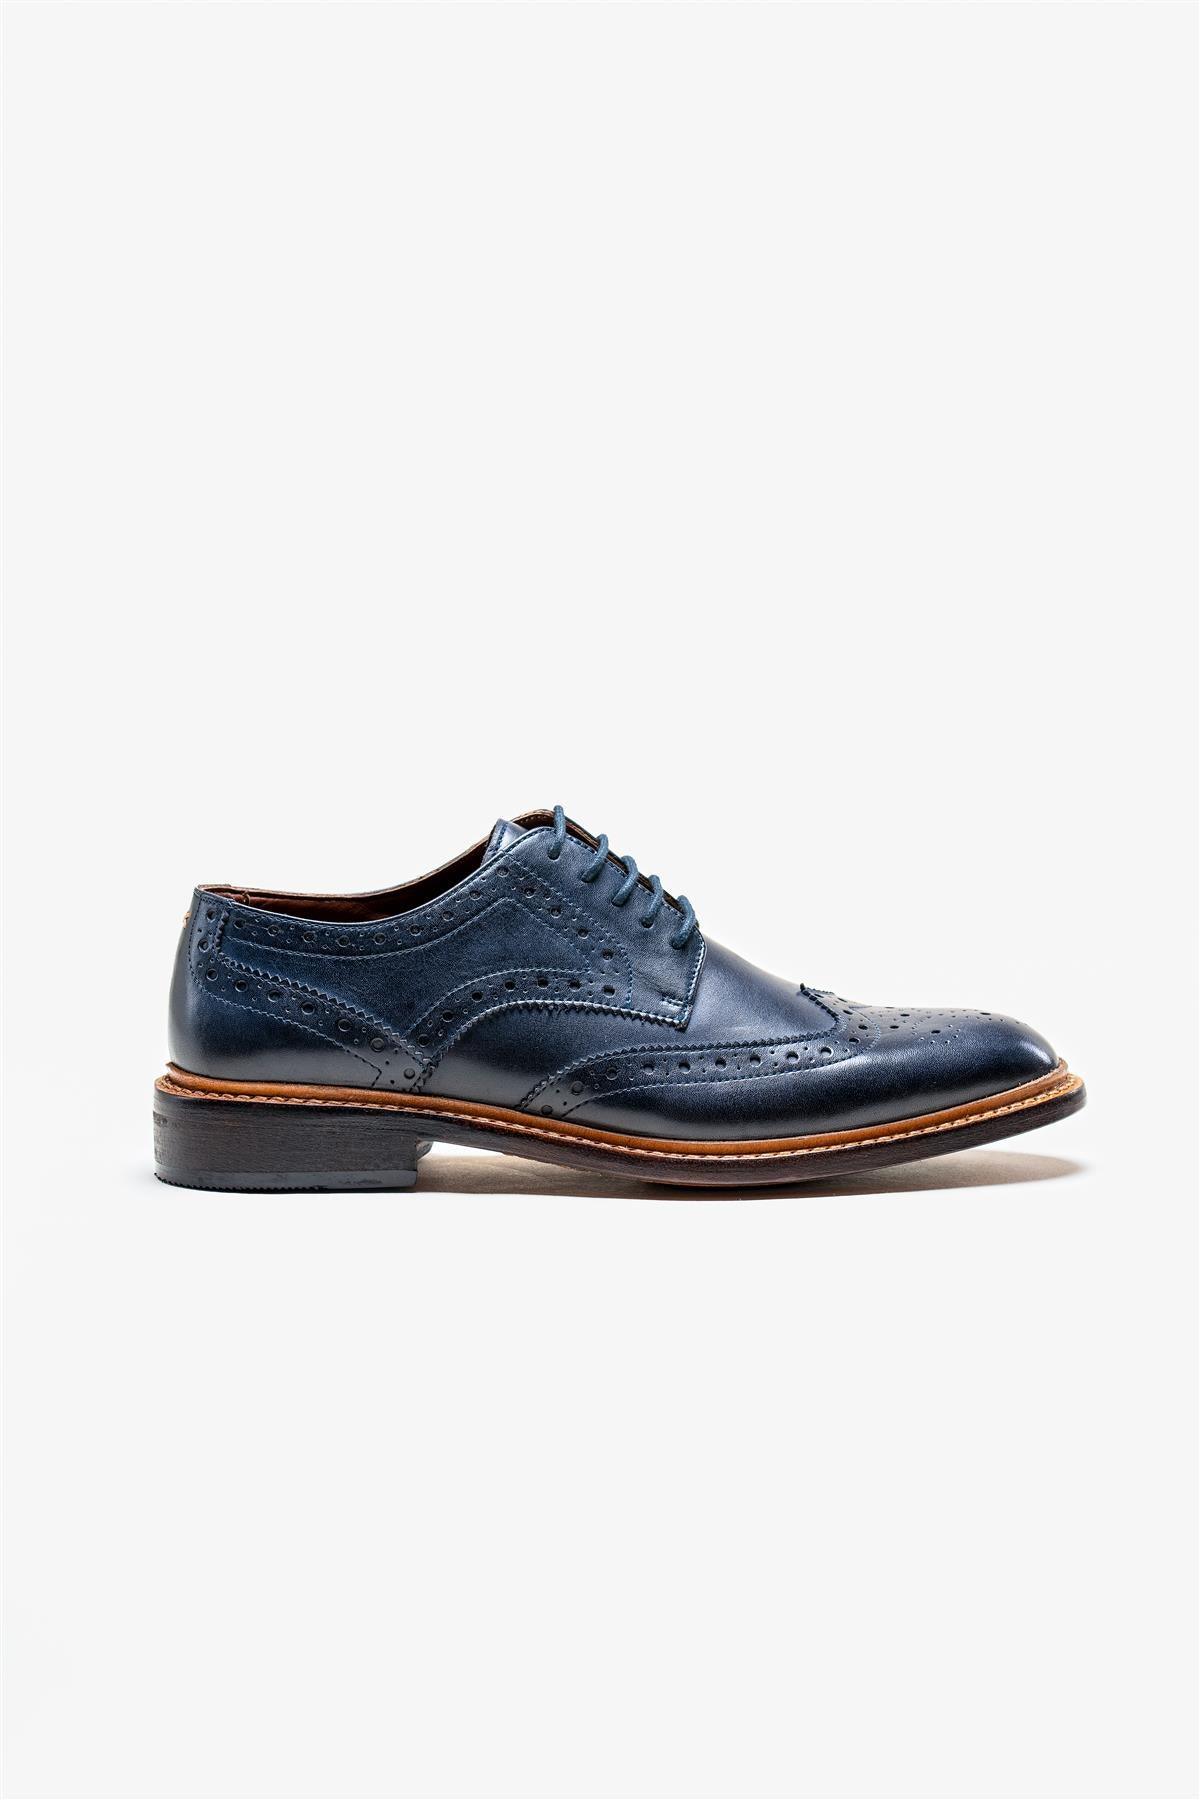 Merton navy shoe side